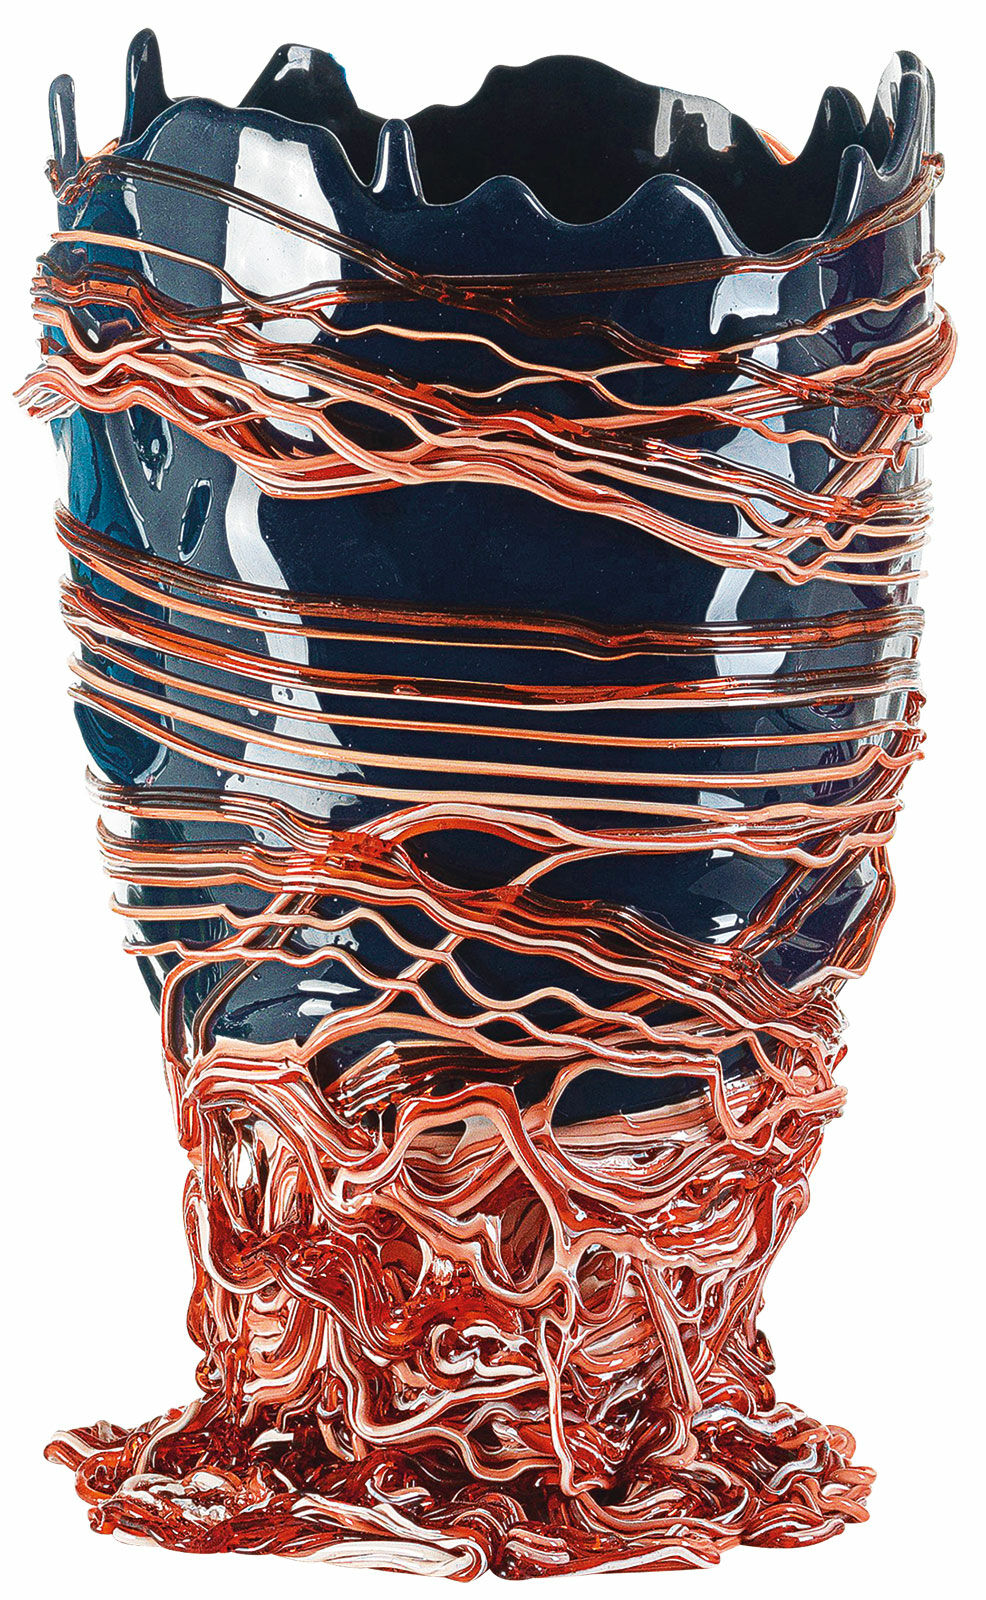 Vase "Spaghetti", silicone by Gaetano Pesce